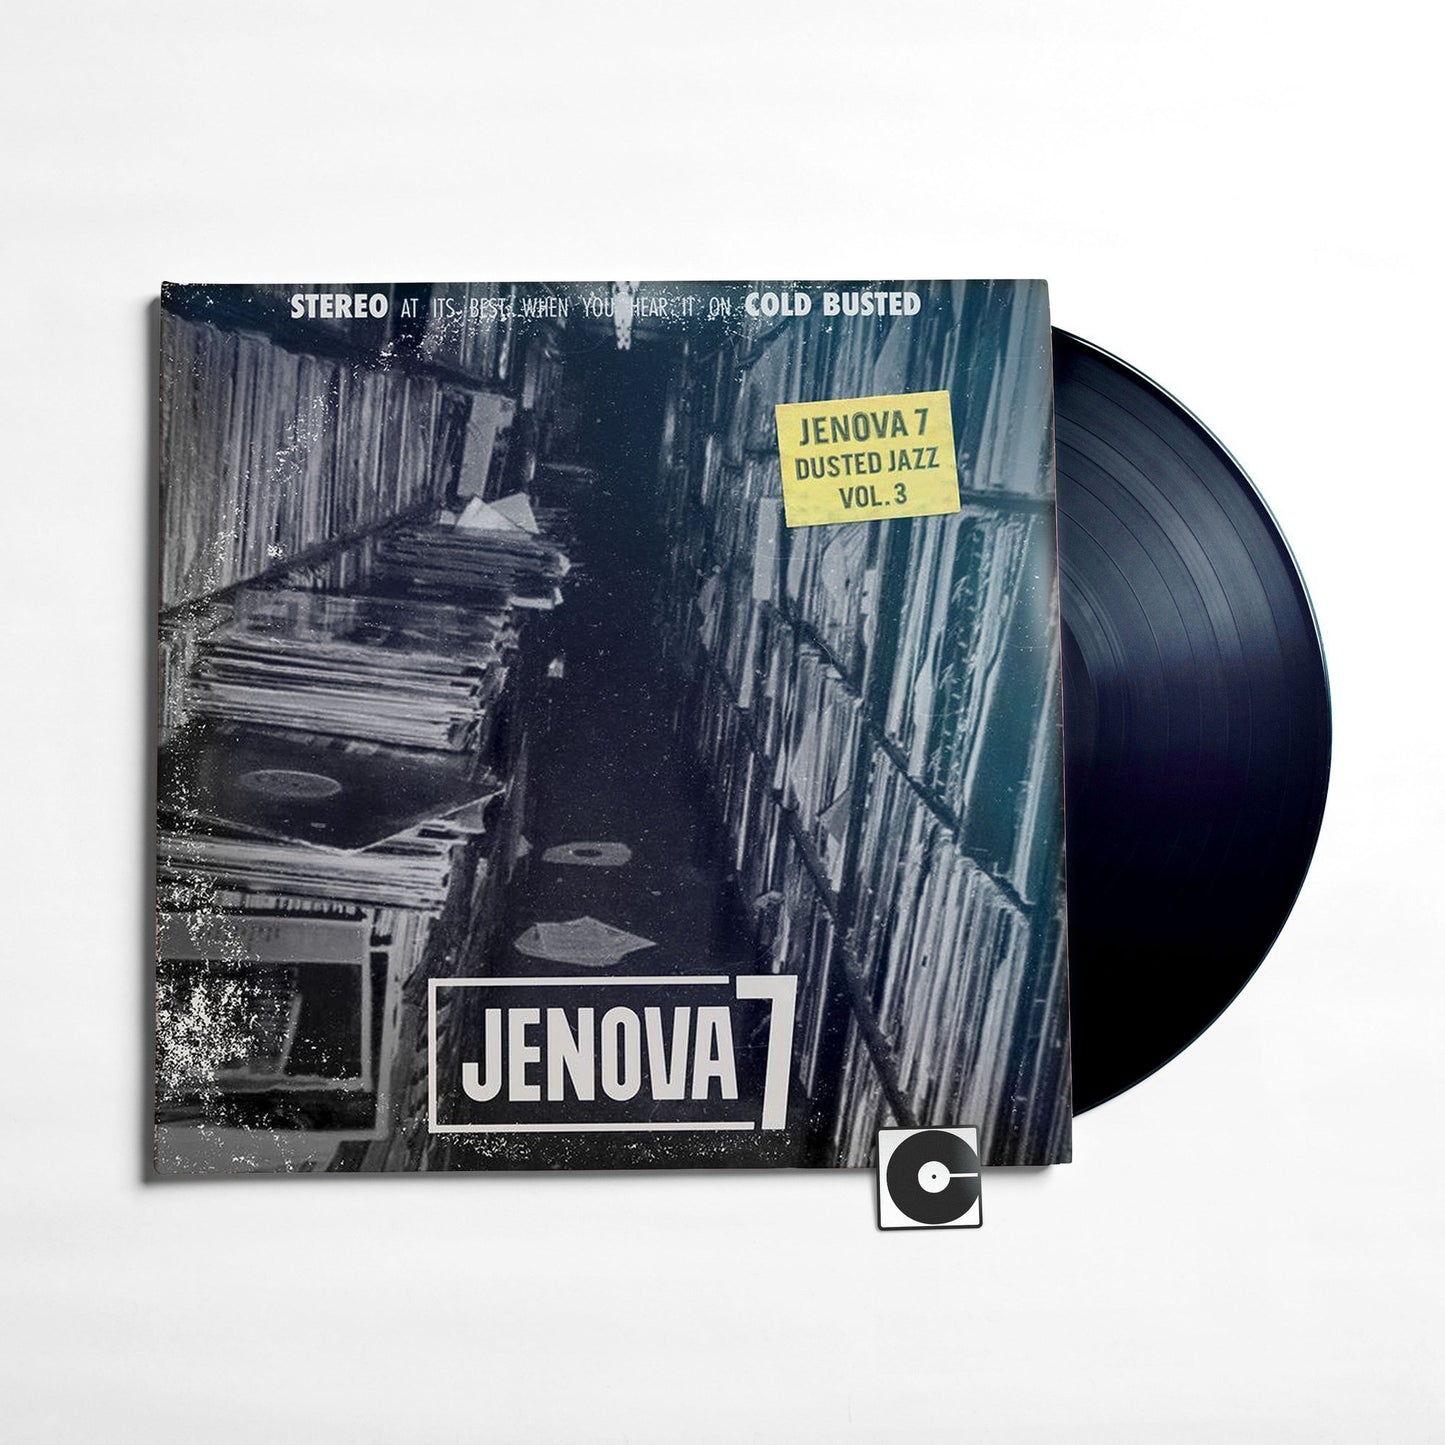 Jenova 7 - "Dusted Jazz Vol. 3"